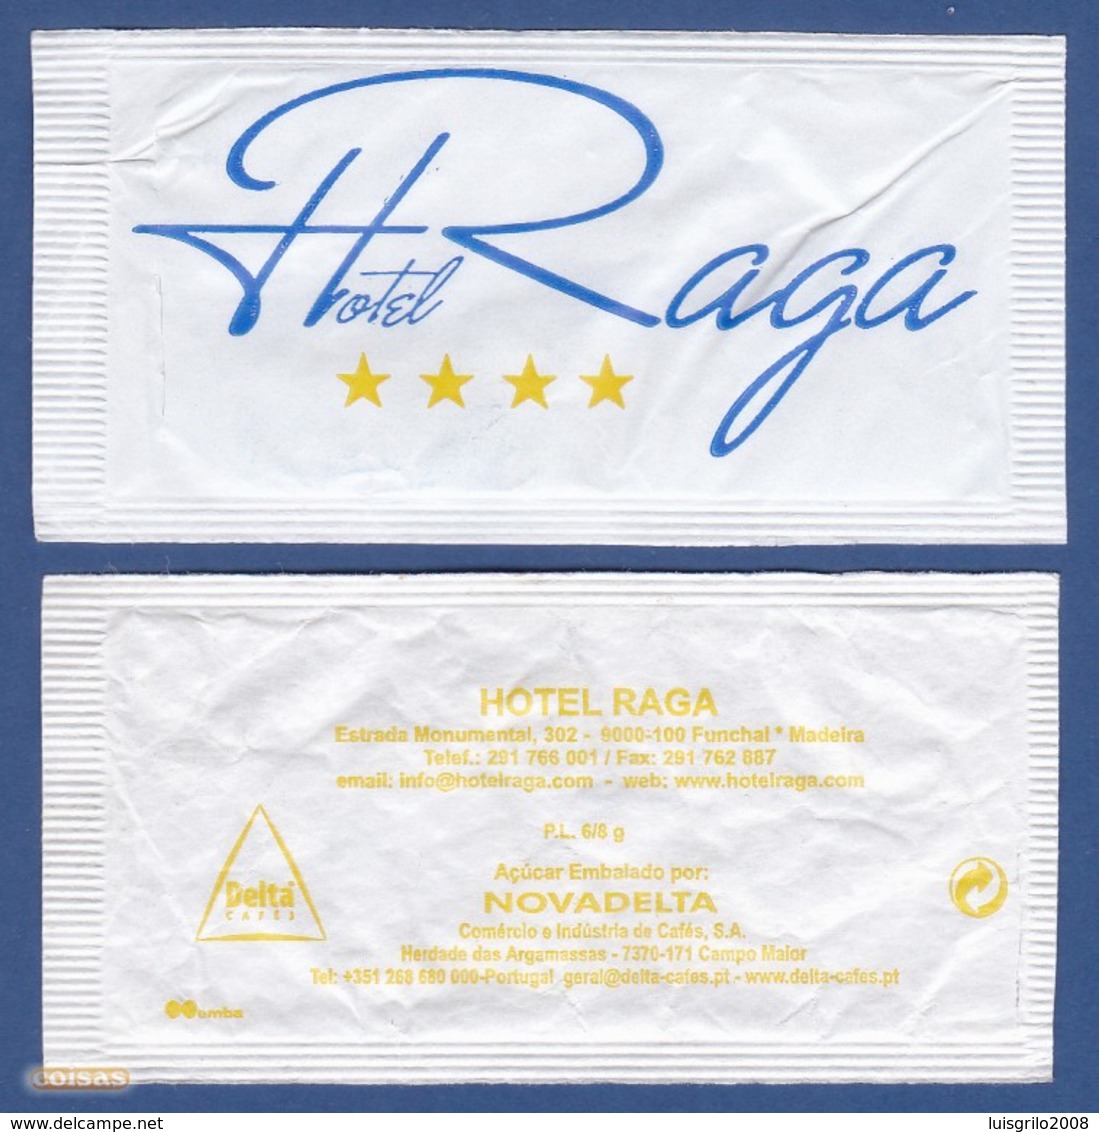 Hôtel / Hotel - Raga Hotel, Funchal Madeira / Cafés Delta, Portugal - Sucres